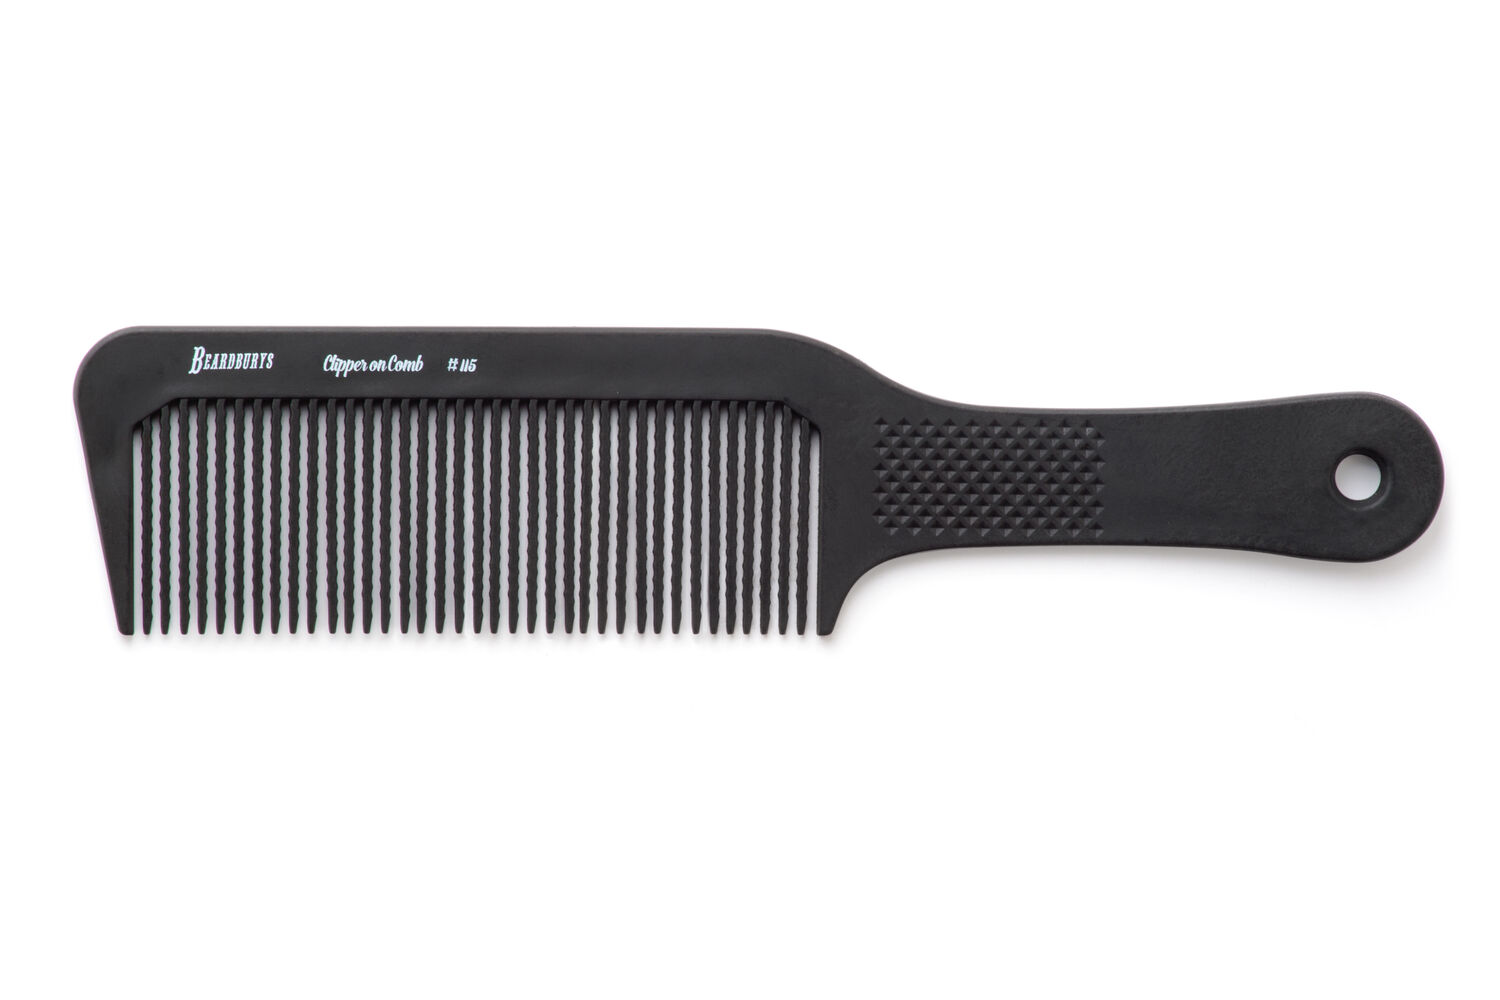 beardburys-barber-s-comb-clipper-overcomb